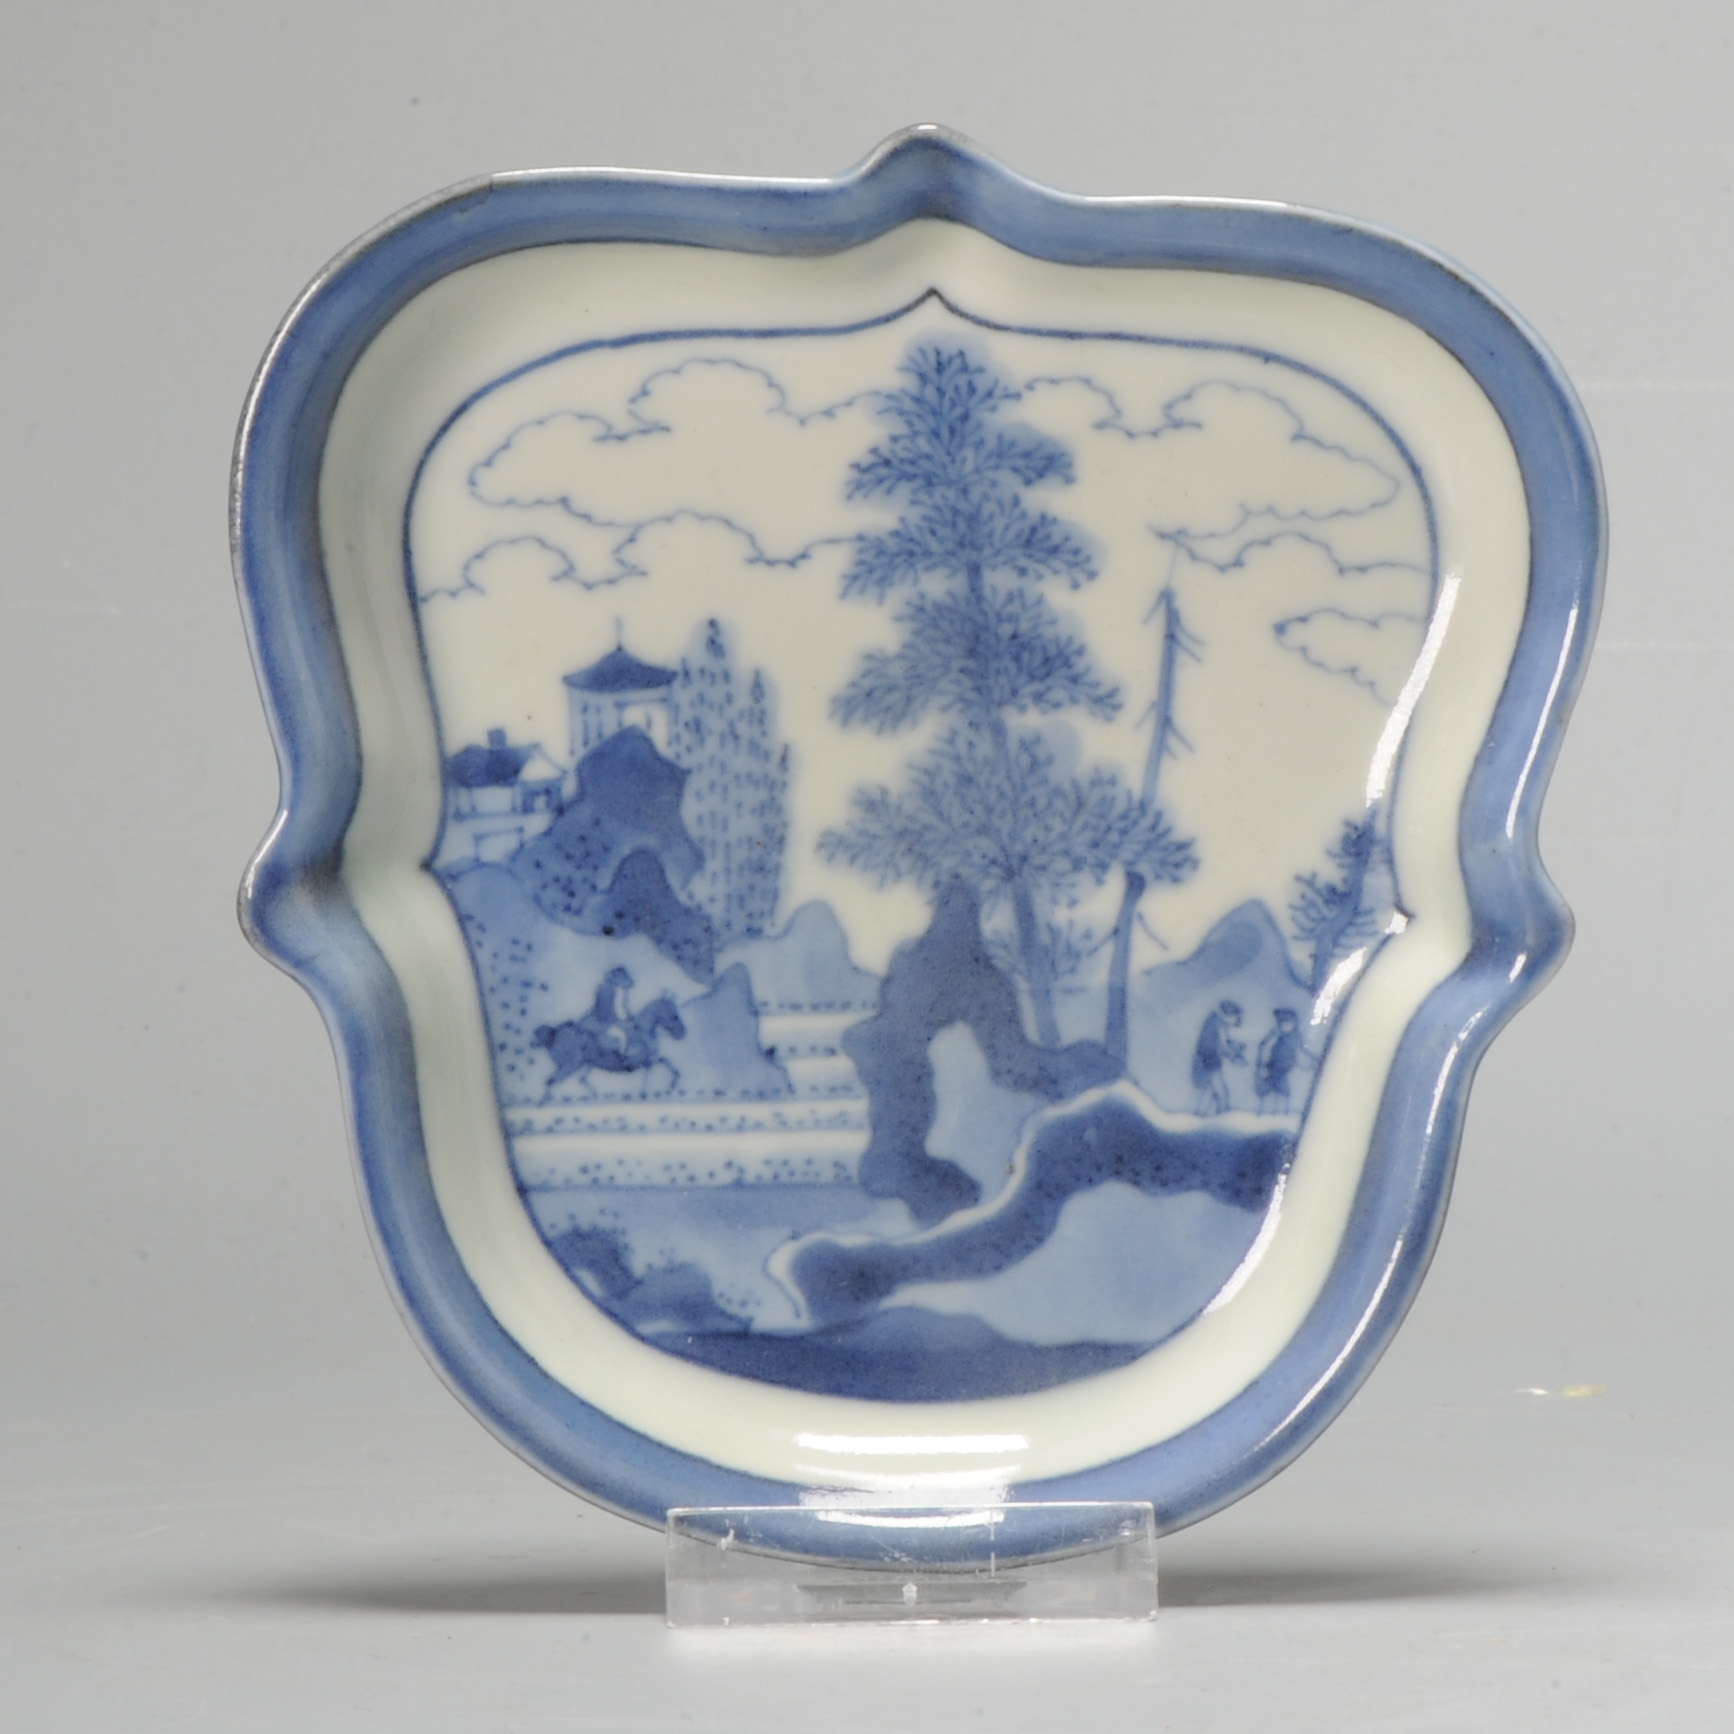 Antique Japanese Arita Frederik Van Frytom Style Porcelain Dish c.1700.